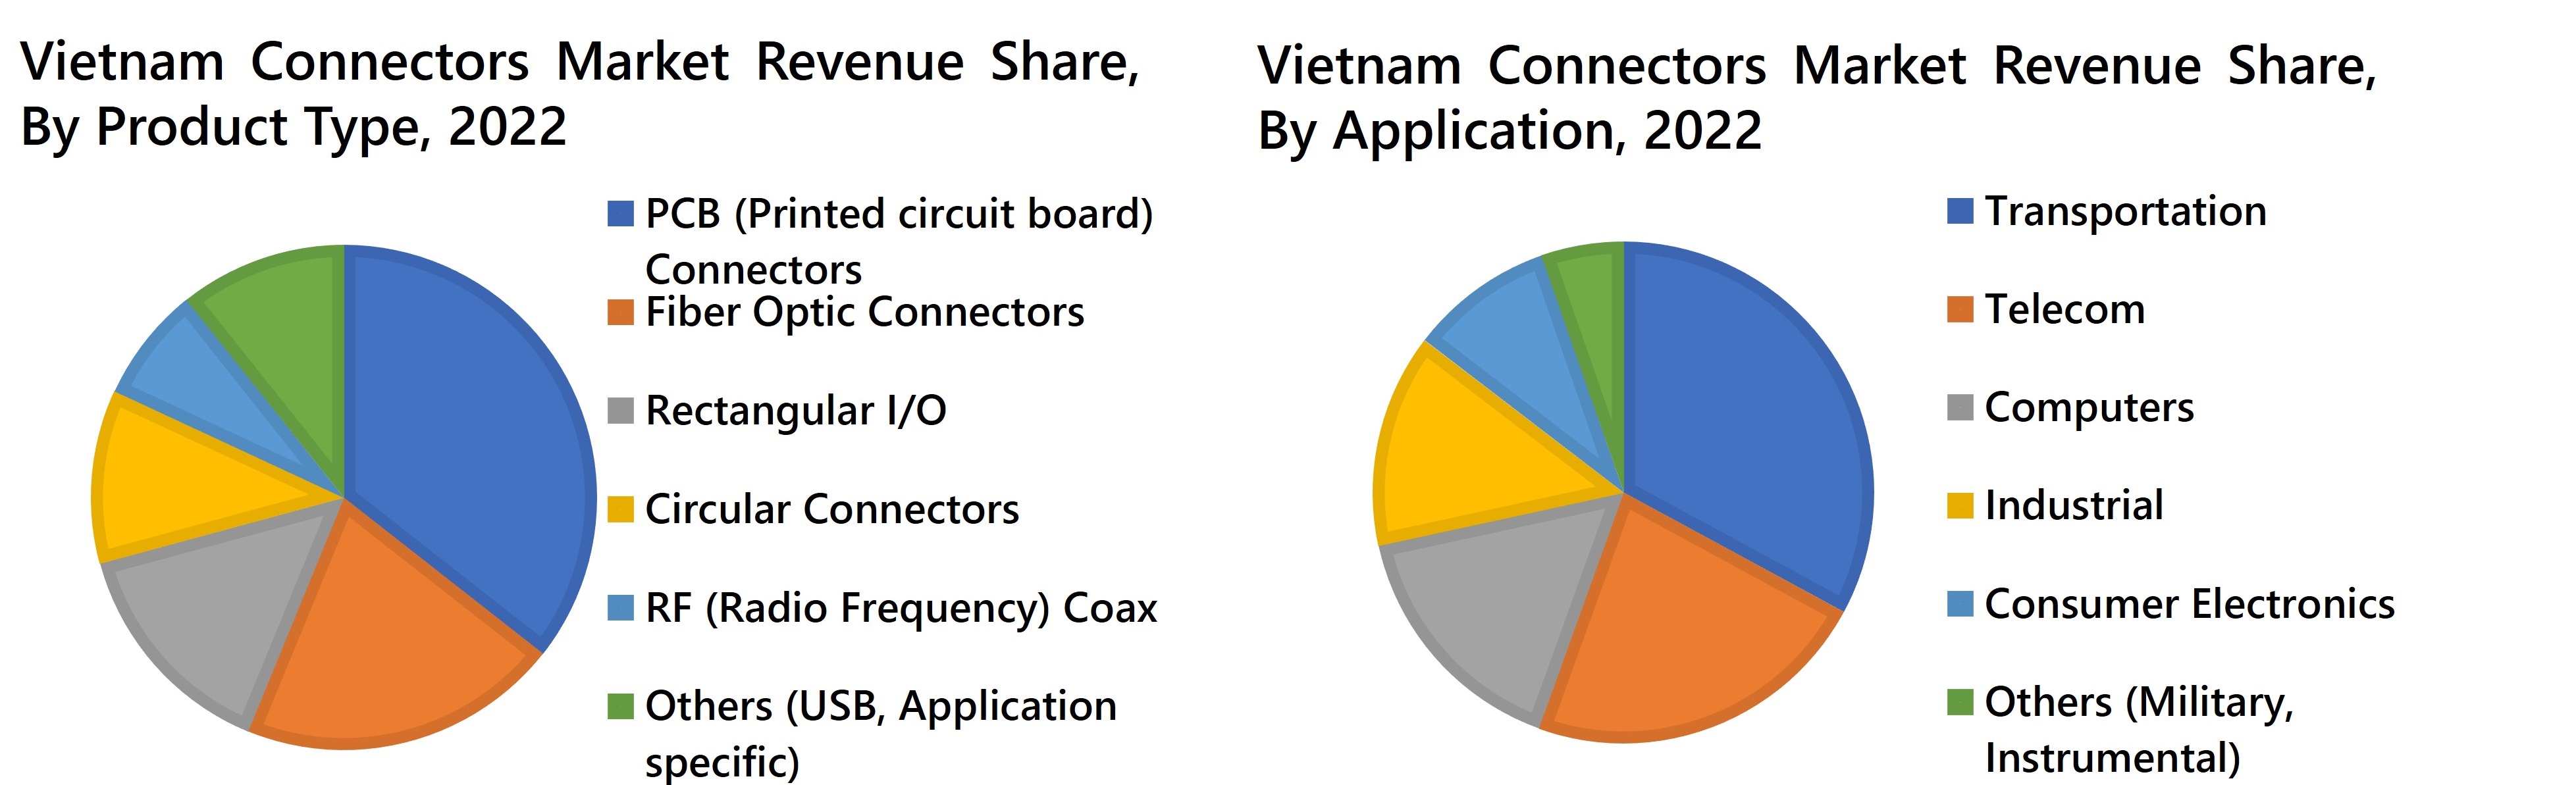 Vietnam Connectors Market